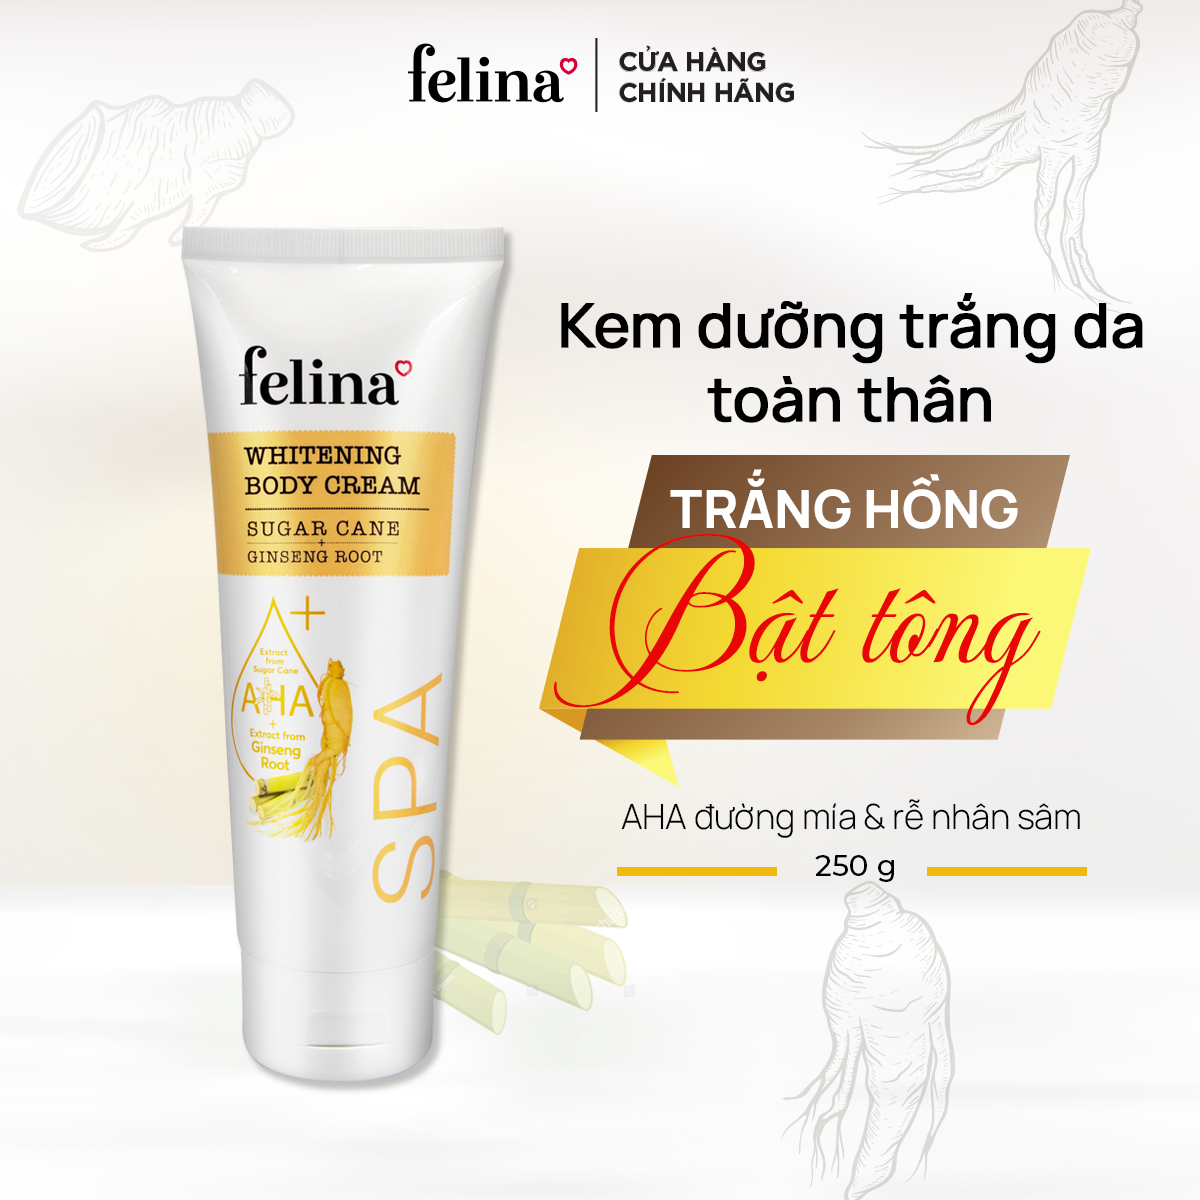 Felina Whitening Body Cream - Sugar Cane Ginseng Root: